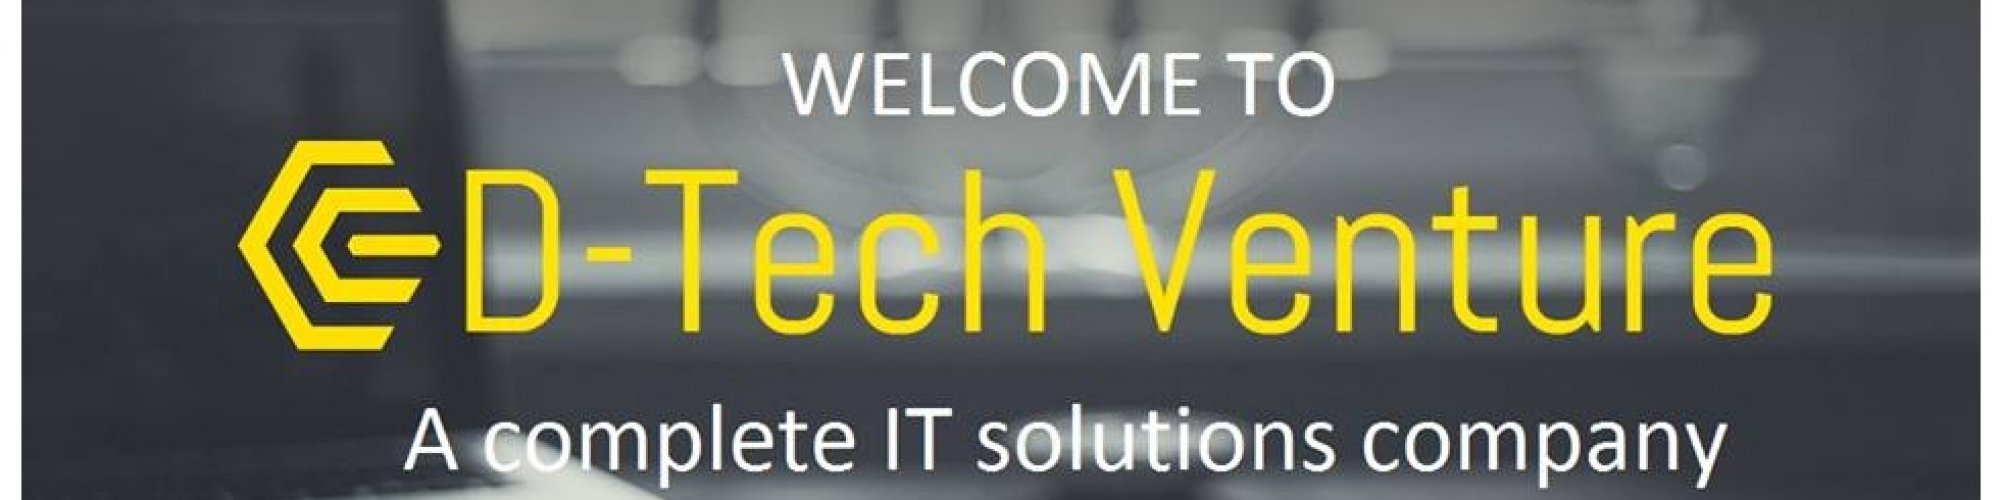 DTech Venture